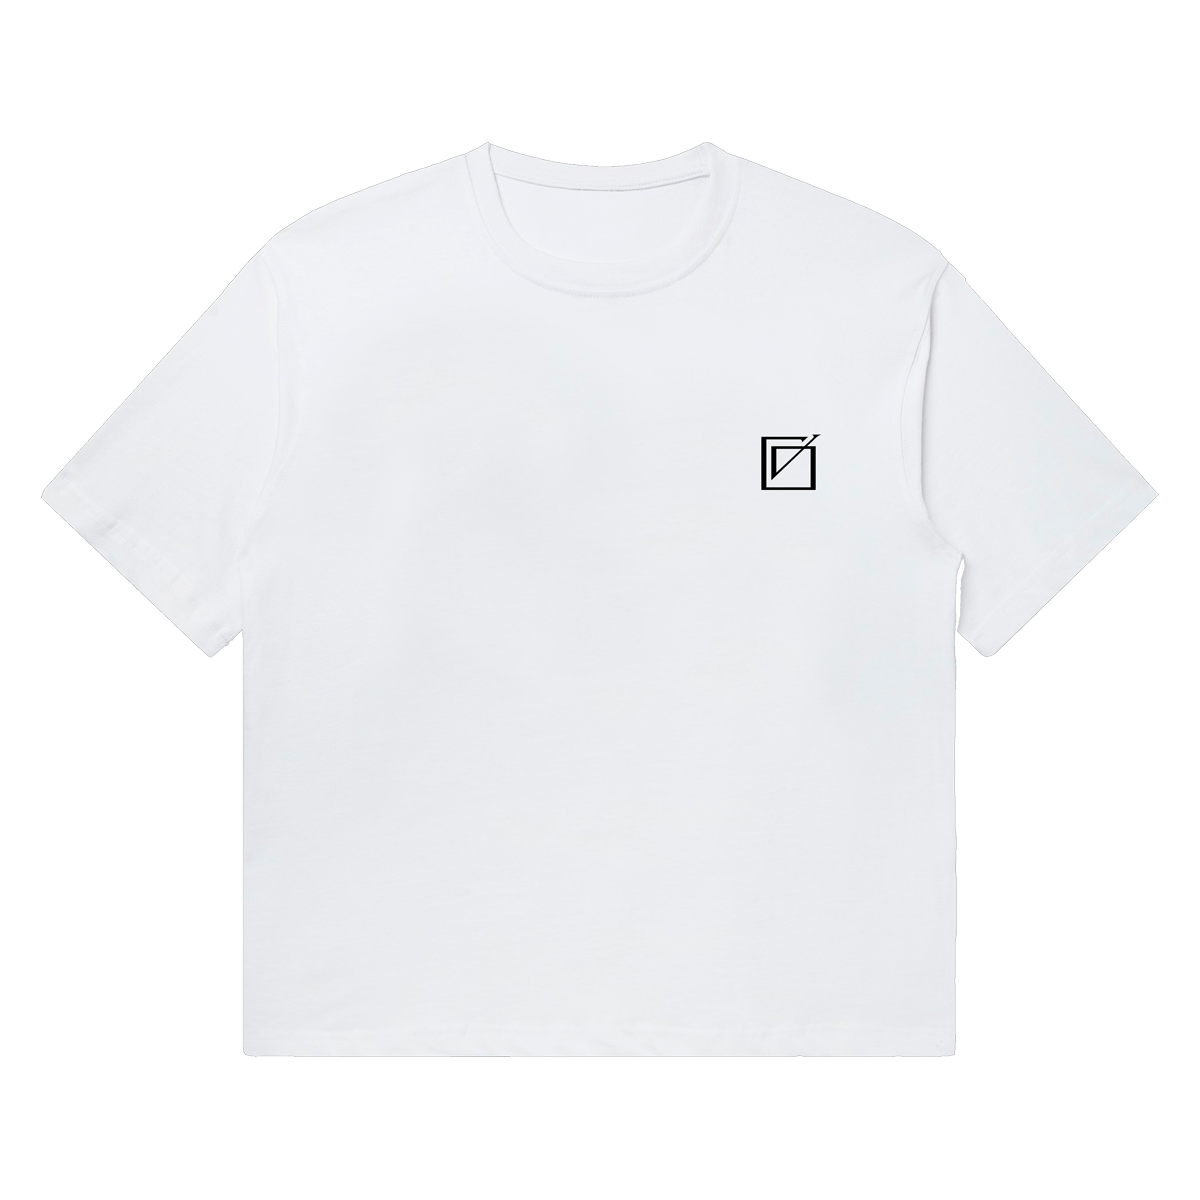 Gorgon City - Salvation T-Shirt